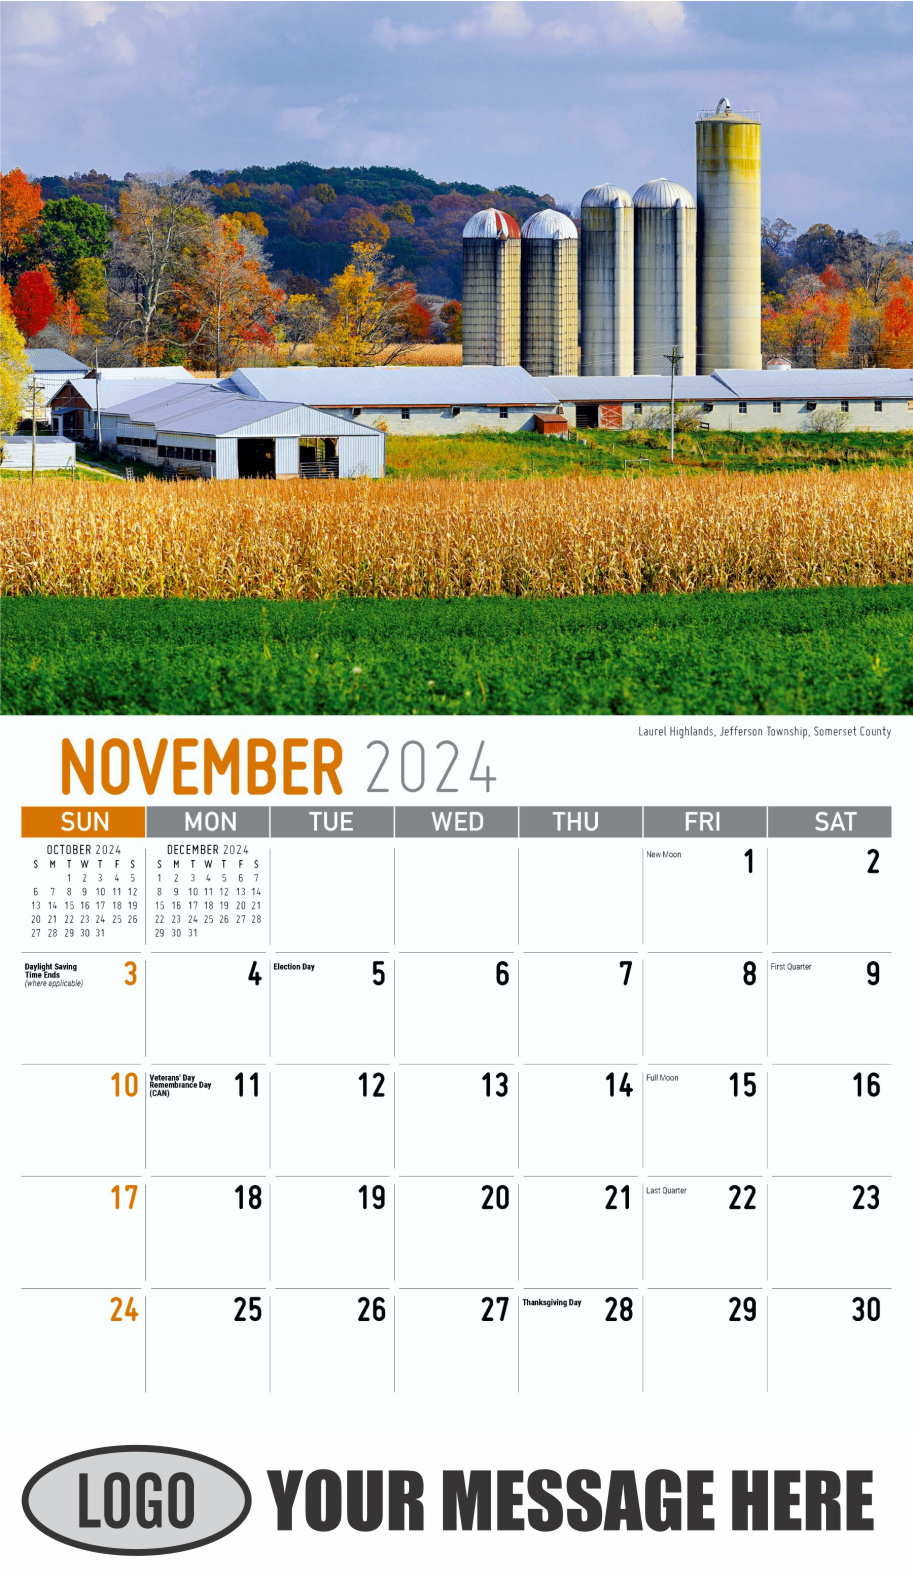 Scenes of Pennsylvania 2024 Business Promotion Calendar - November